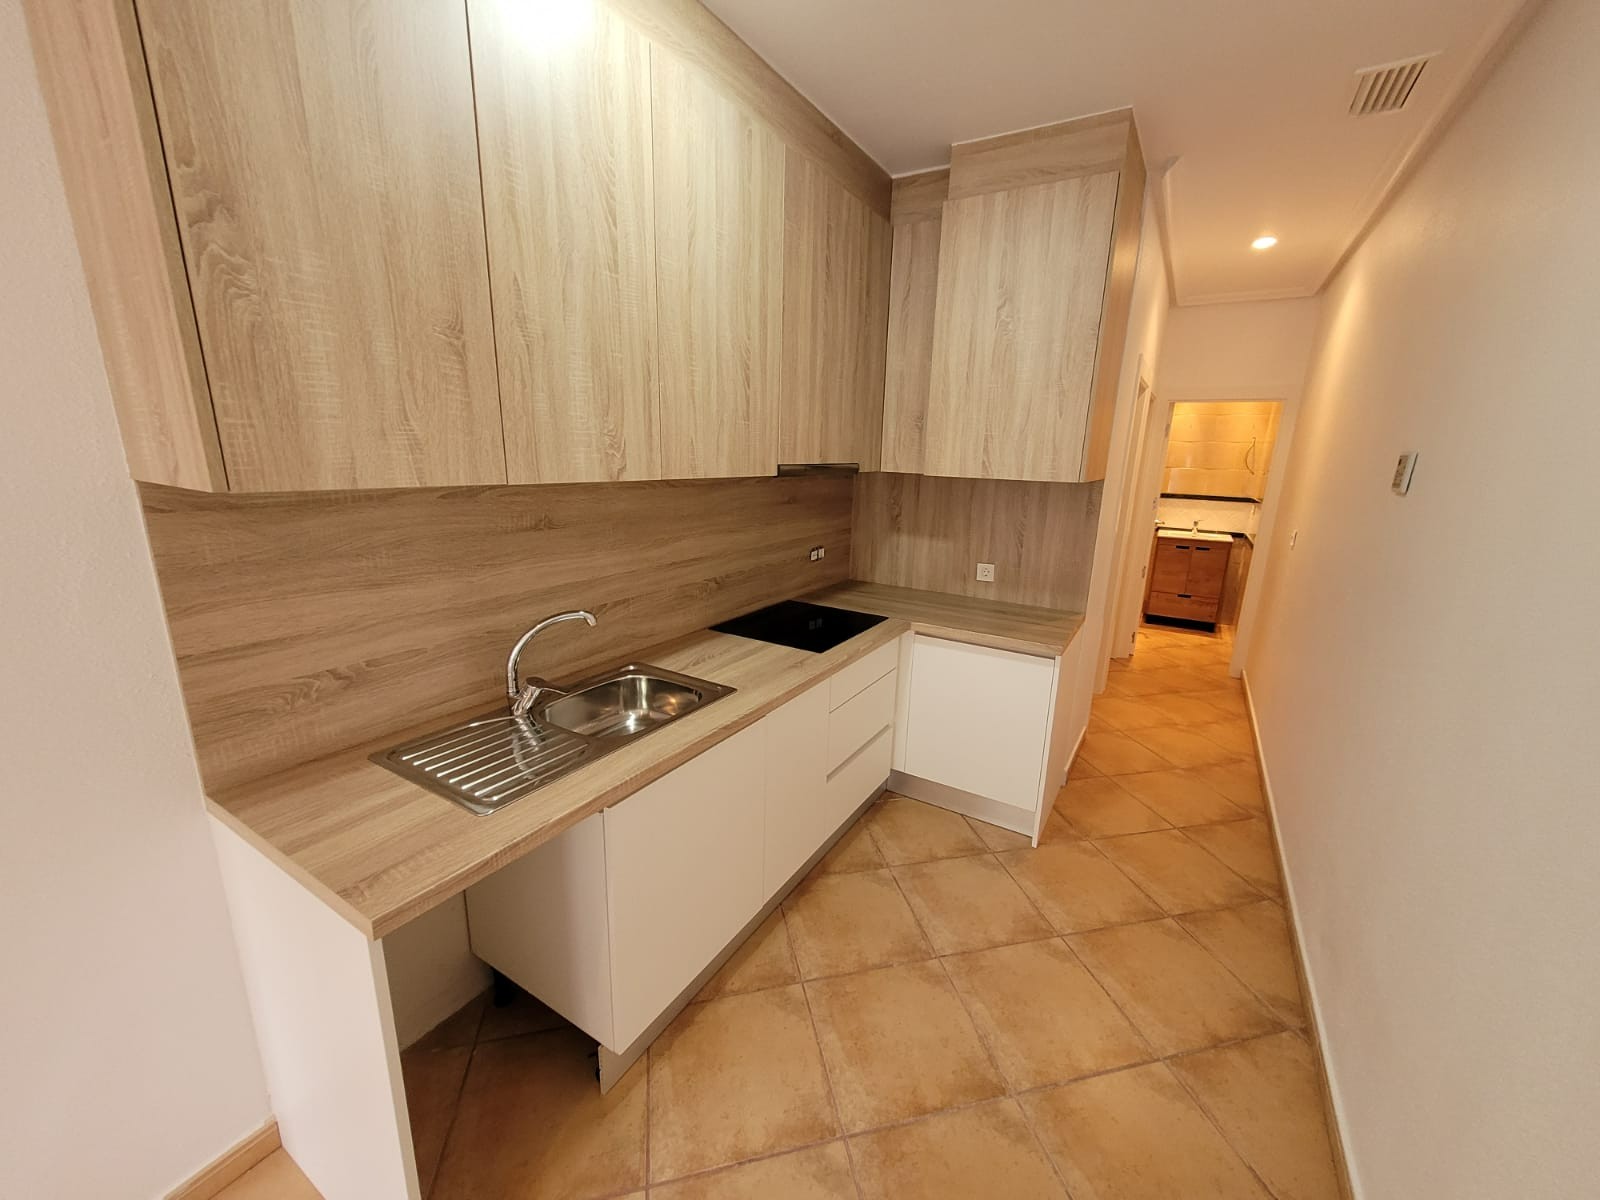 2 bedroom apartment / flat for sale in Algorfa, Costa Blanca